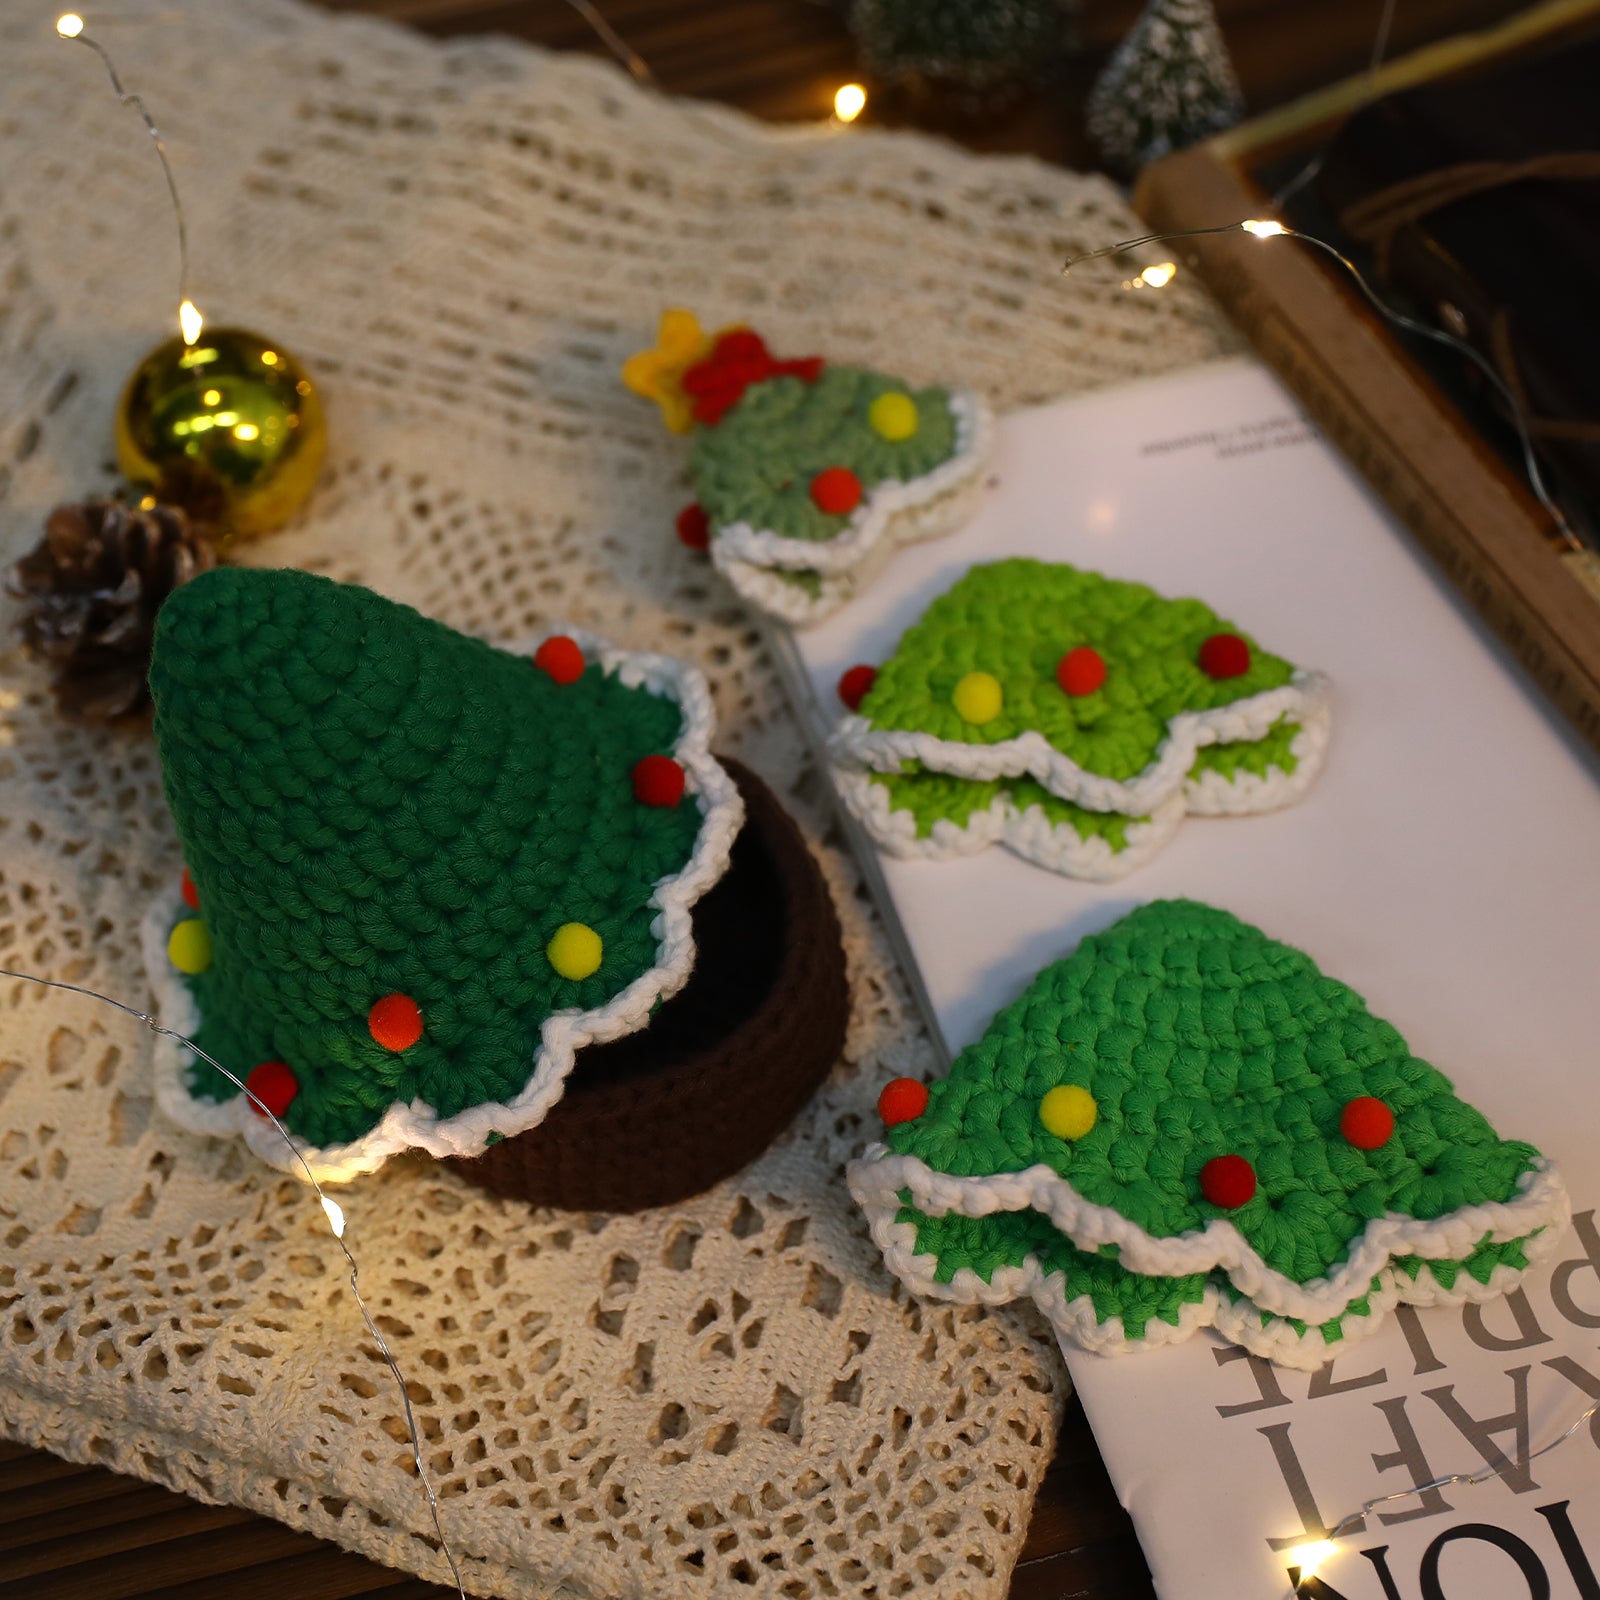 YosaiHom Crochet Kit for Beginners, Christmas Tree House Kit, Crochet  Starter Kit with Step-by-Step Video Tutorials, Yarn, DIY Knitting and  Crochet